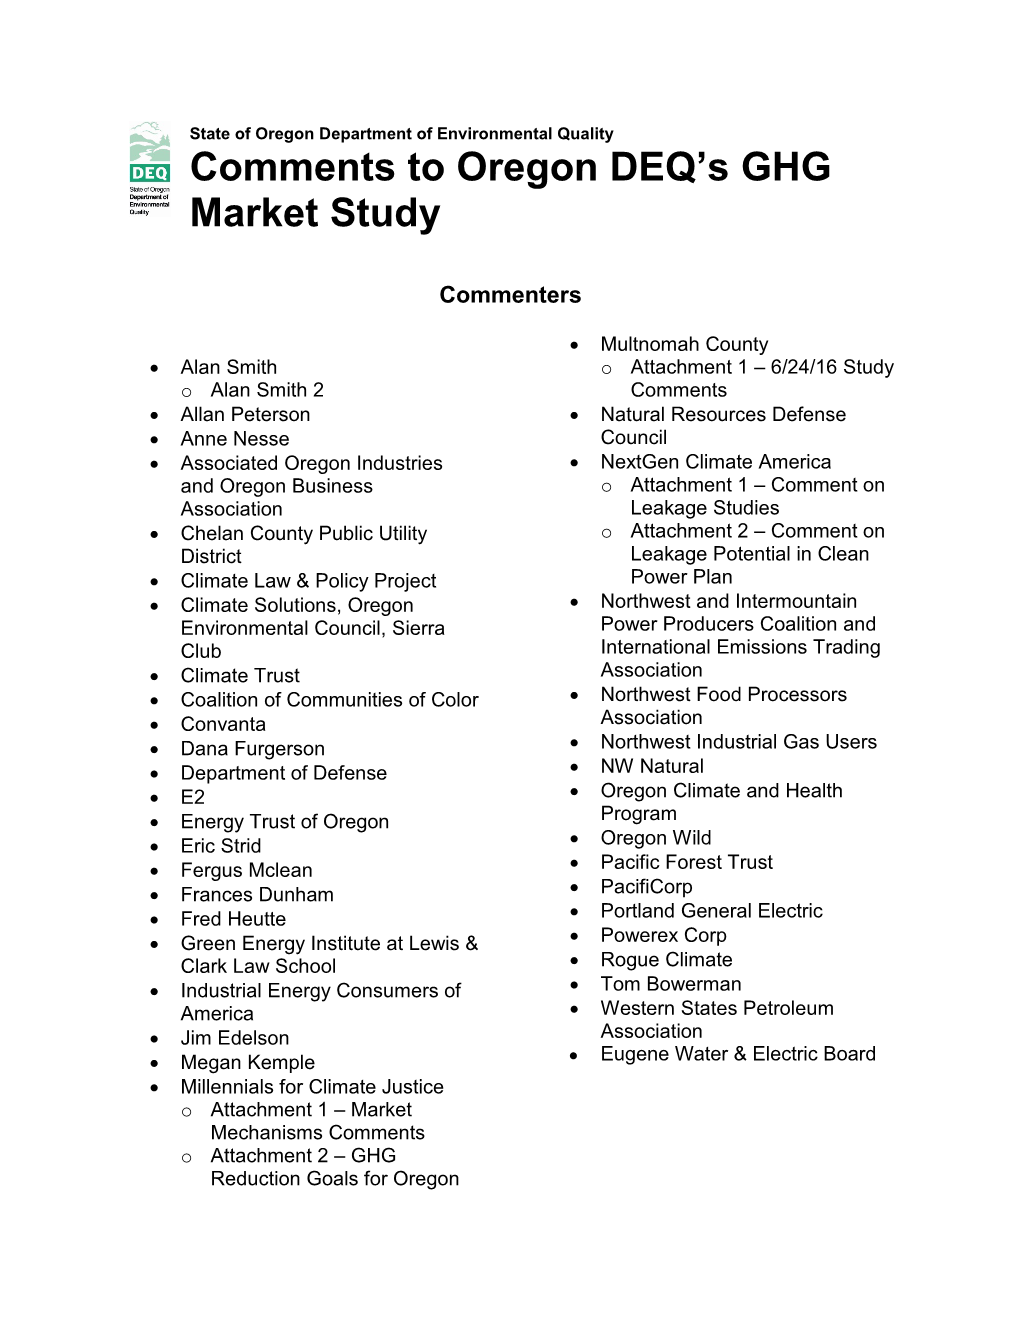 Comments to Oregon DEQ's GHG Market Study